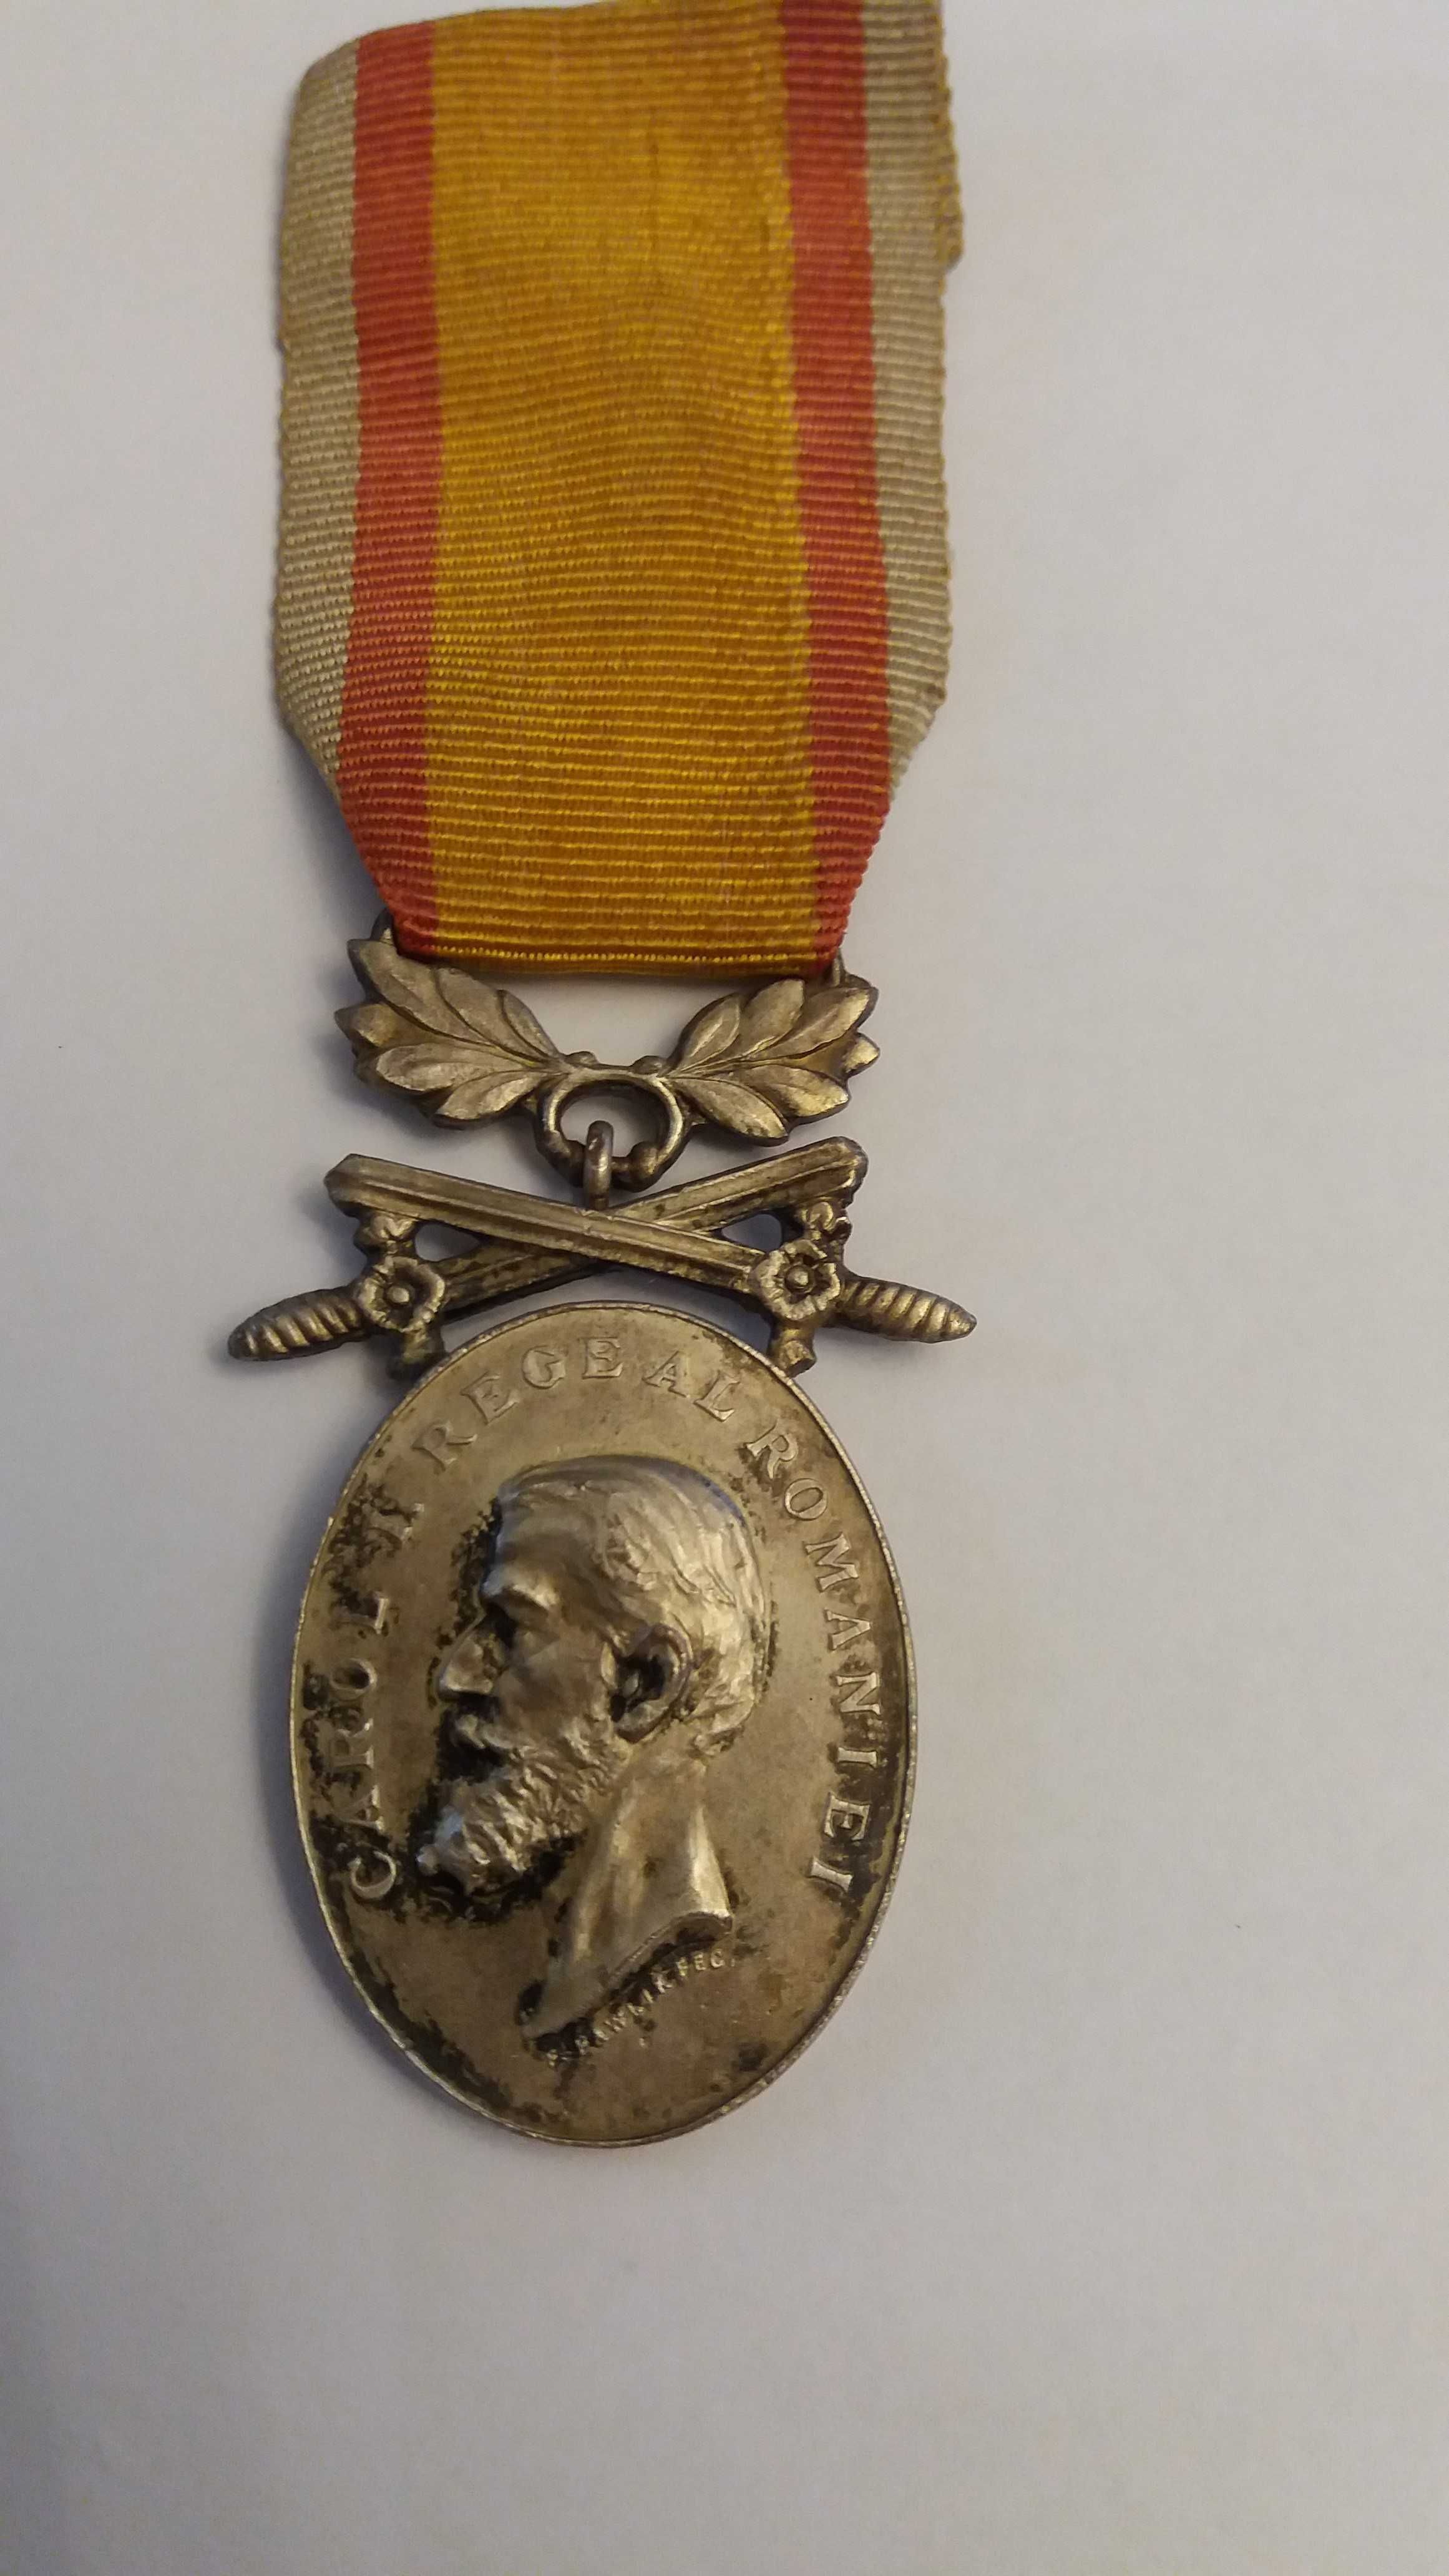 Medalie "Barbatie si Credinta" cu semnatura gravorilor